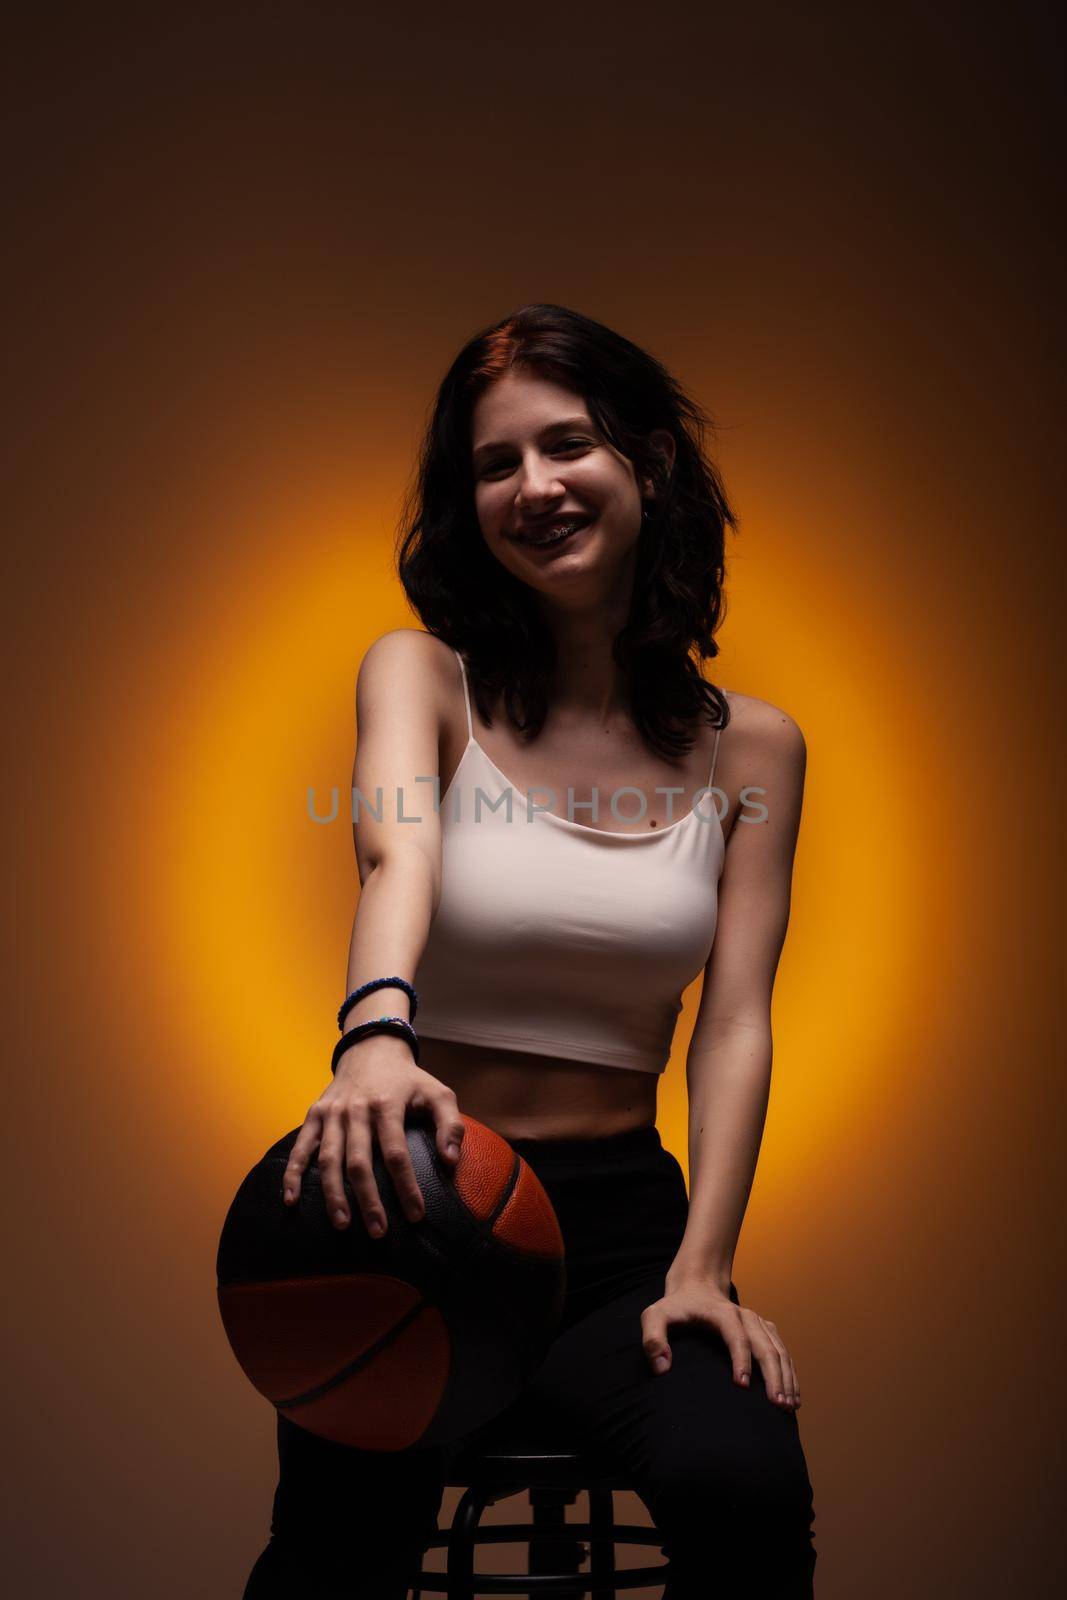 Teenage girl with dental braces holding basketball. Studio portrait on orange colored background.. by kokimk